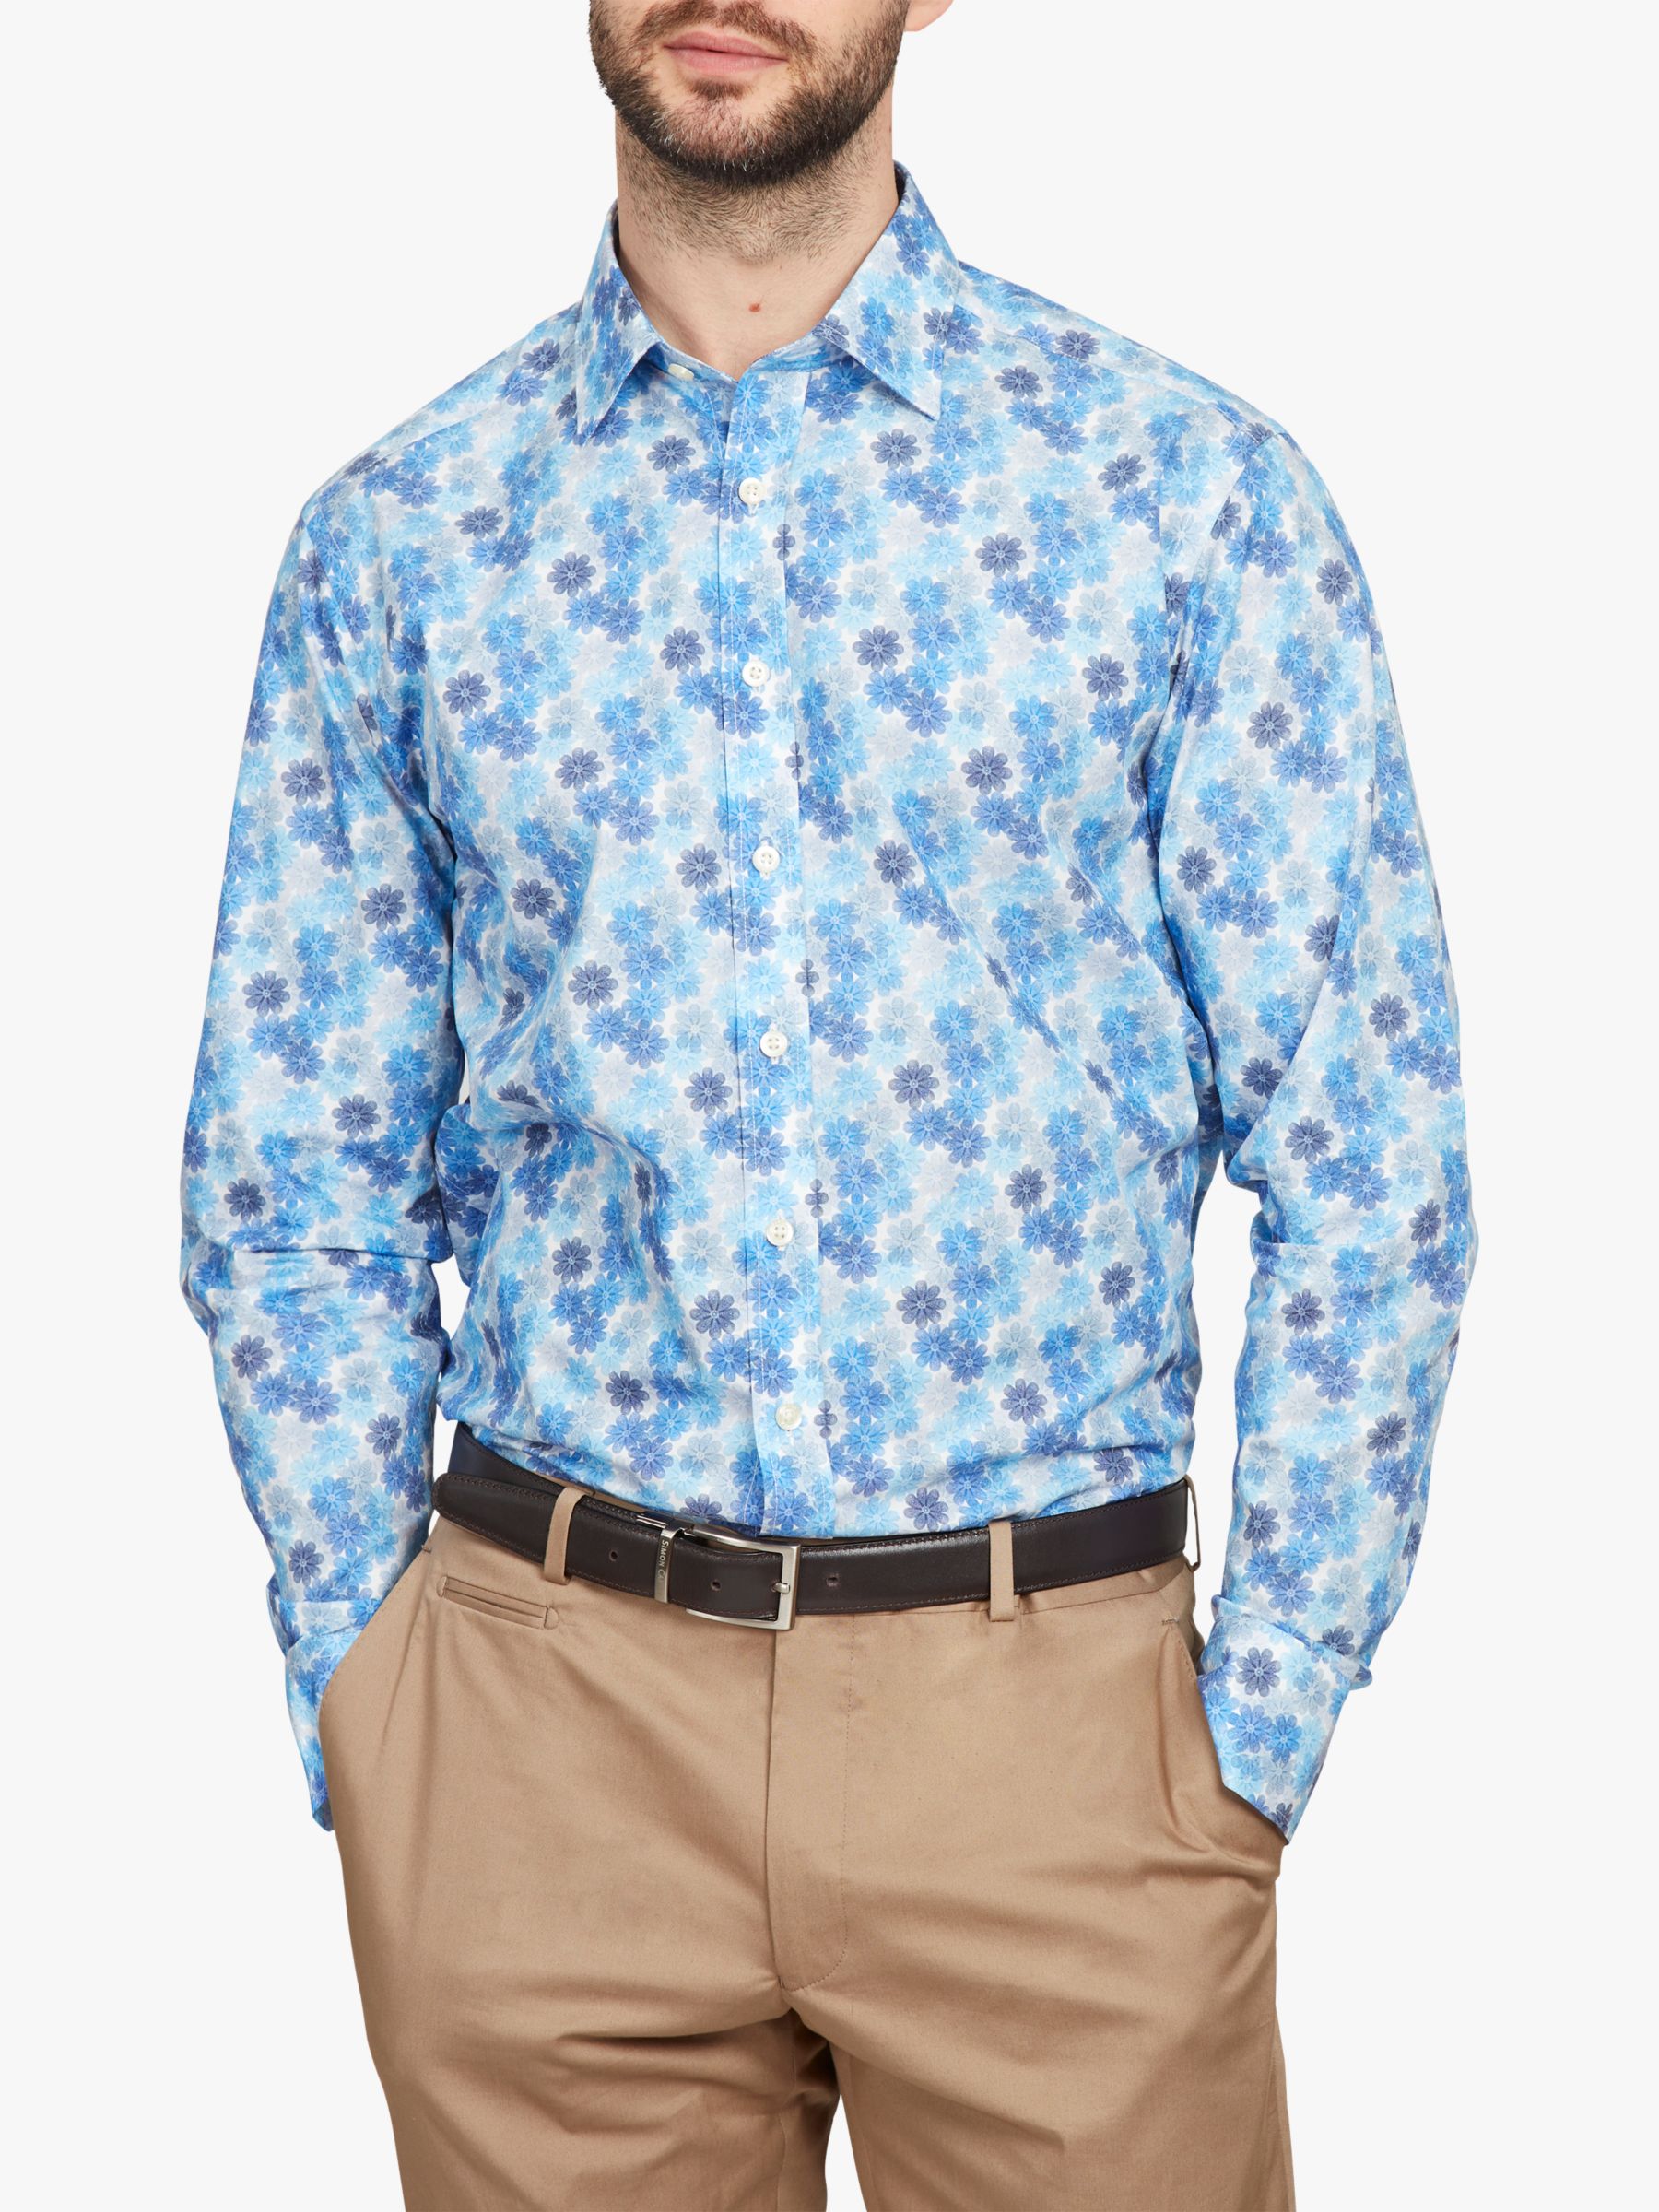 Simon Carter Spriograph Floral Shirt, Blue/Multi, 15.5